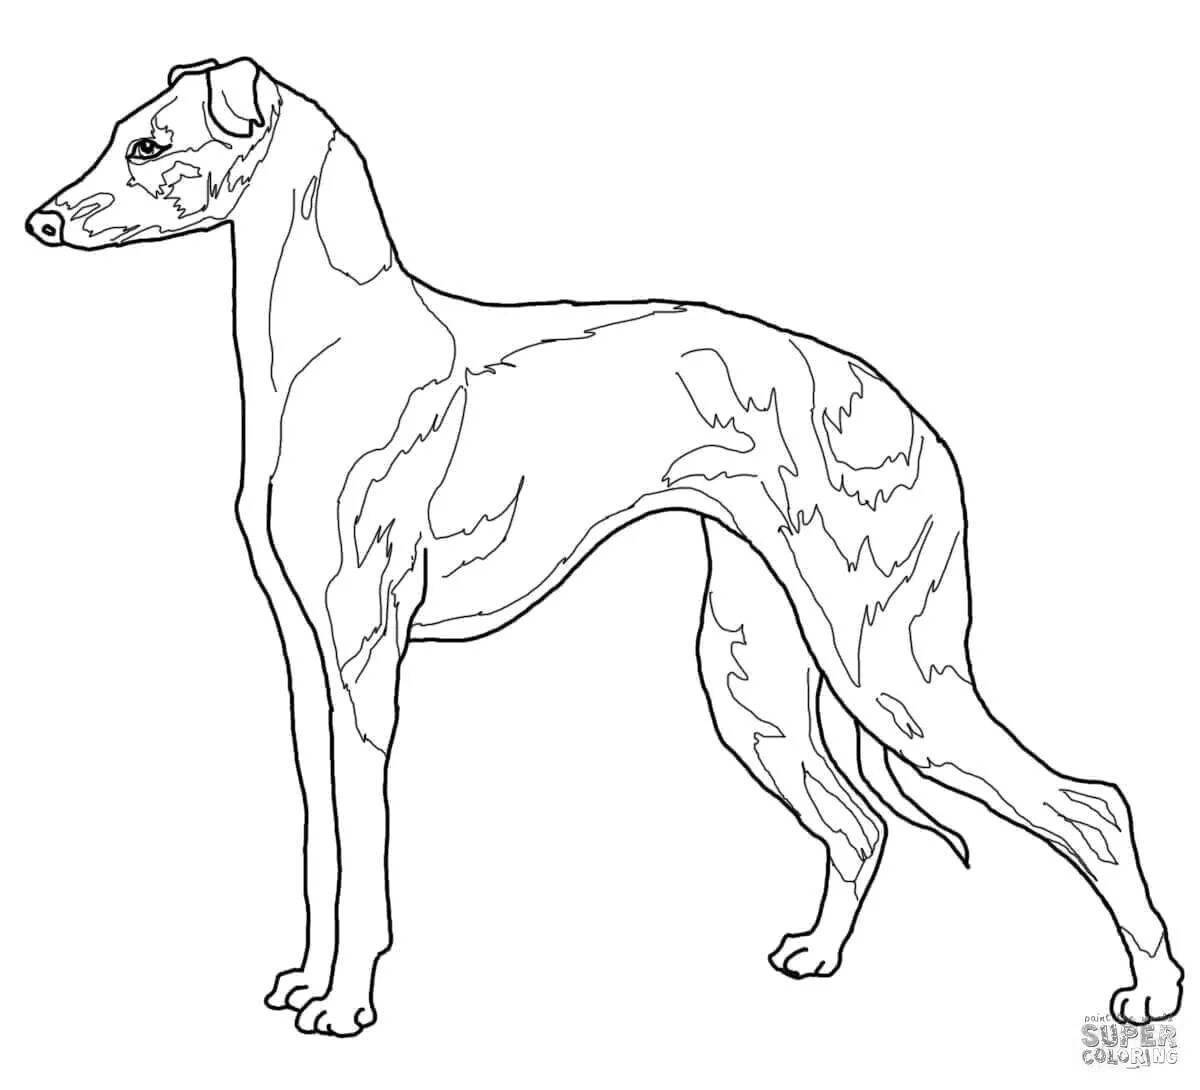 Naughty German dog coloring page